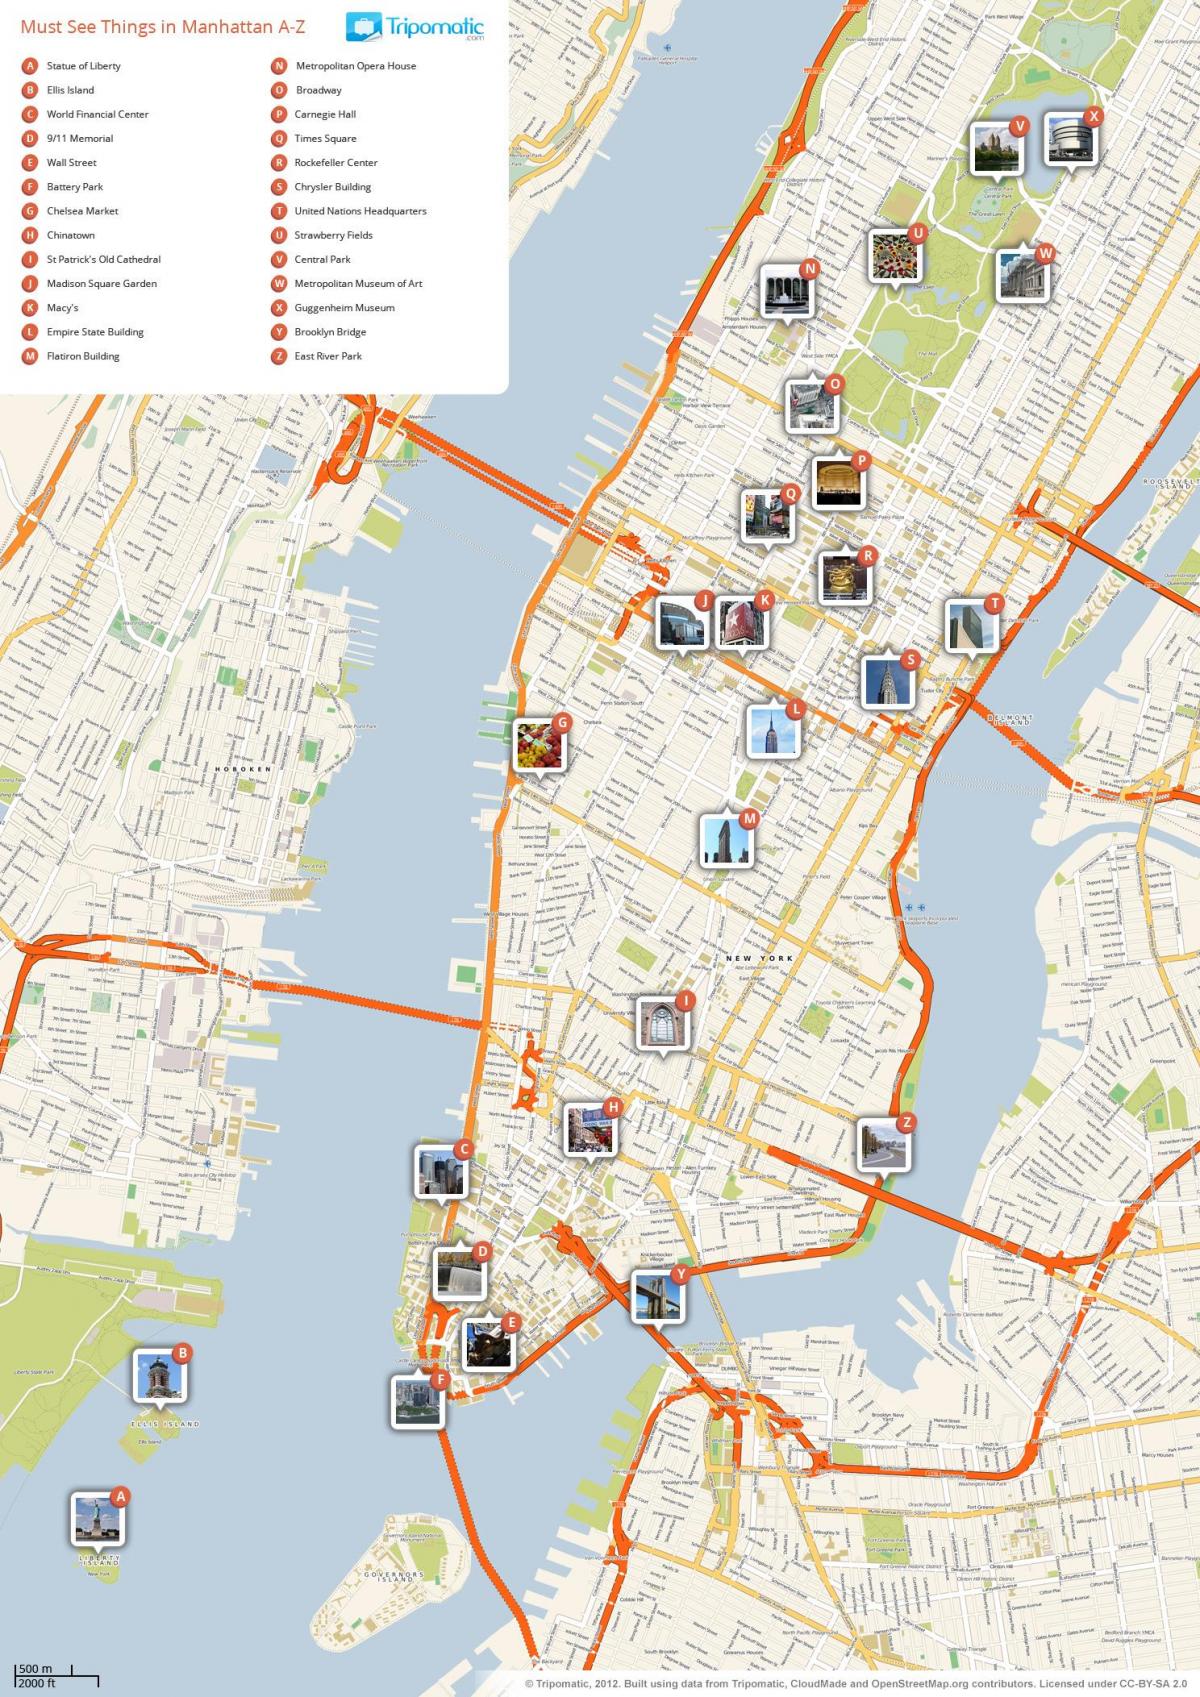 harta e Manhattan treguar atraksione turistike